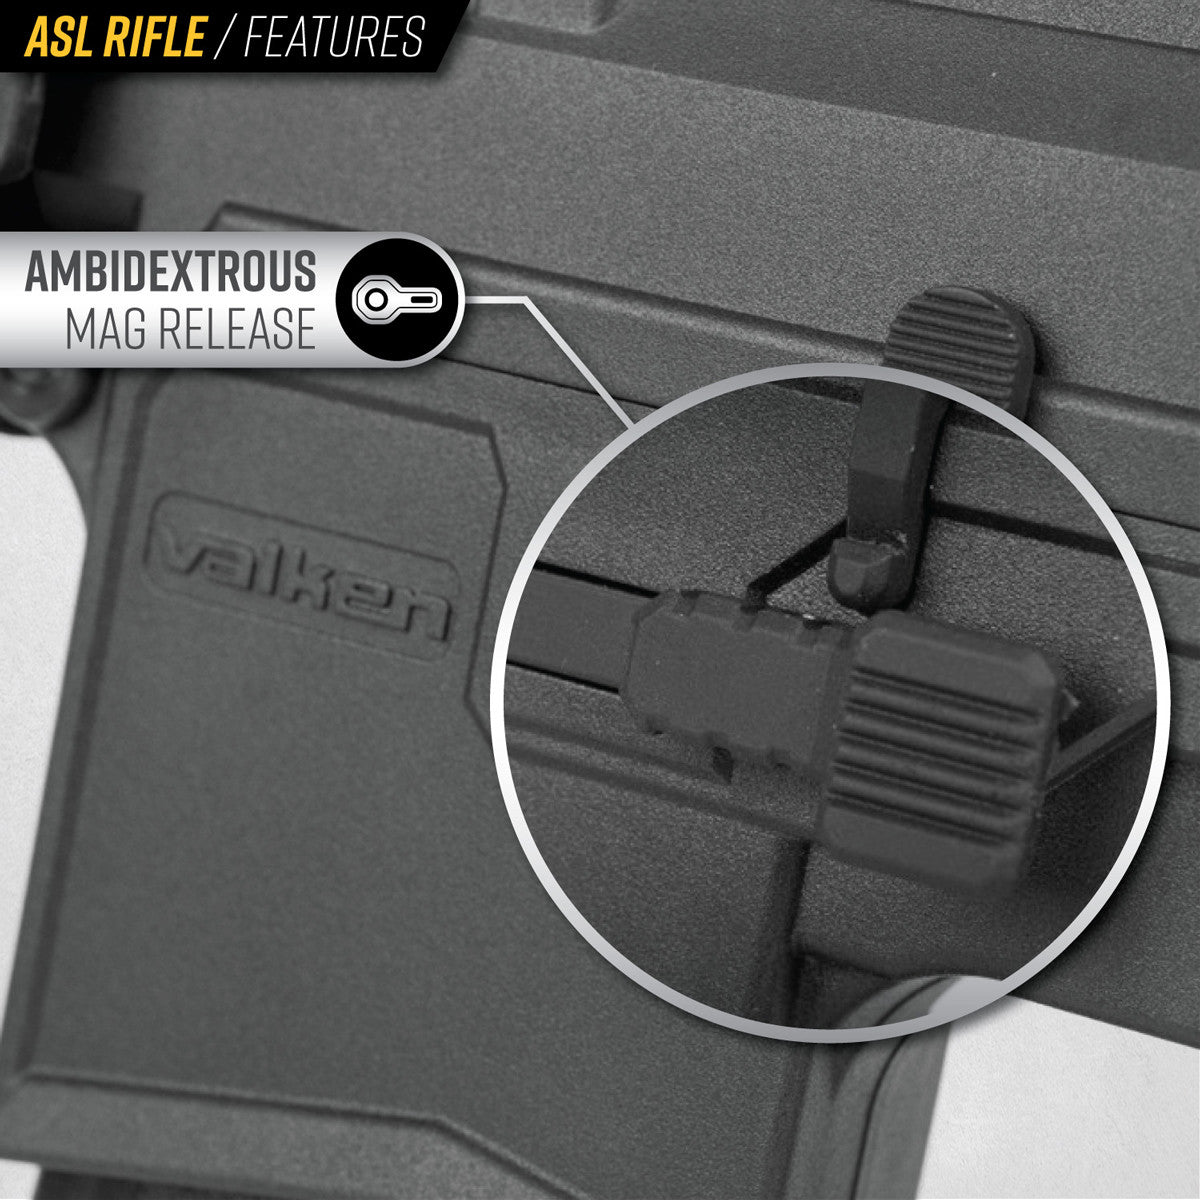 Valken ASL AEG Kilo Airsoft Rifle - Black